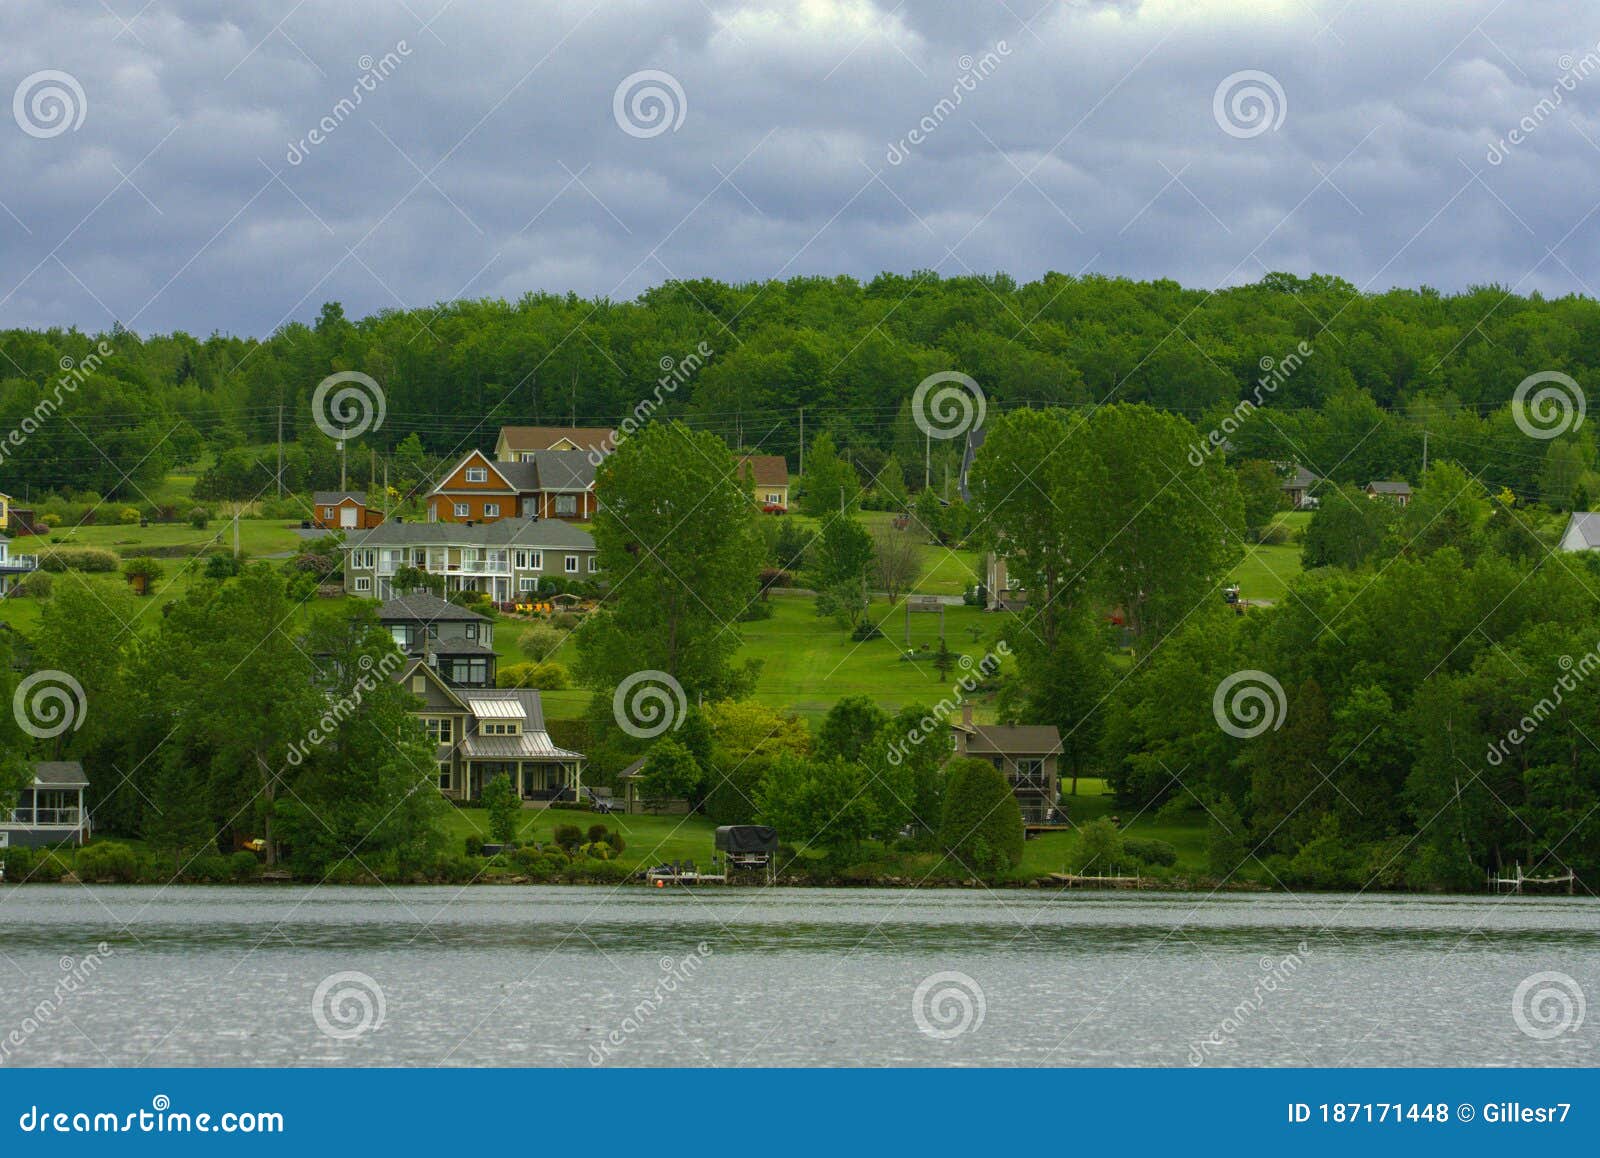 Дом на берегу озера (42 фото) - красивые картинки и HD фото